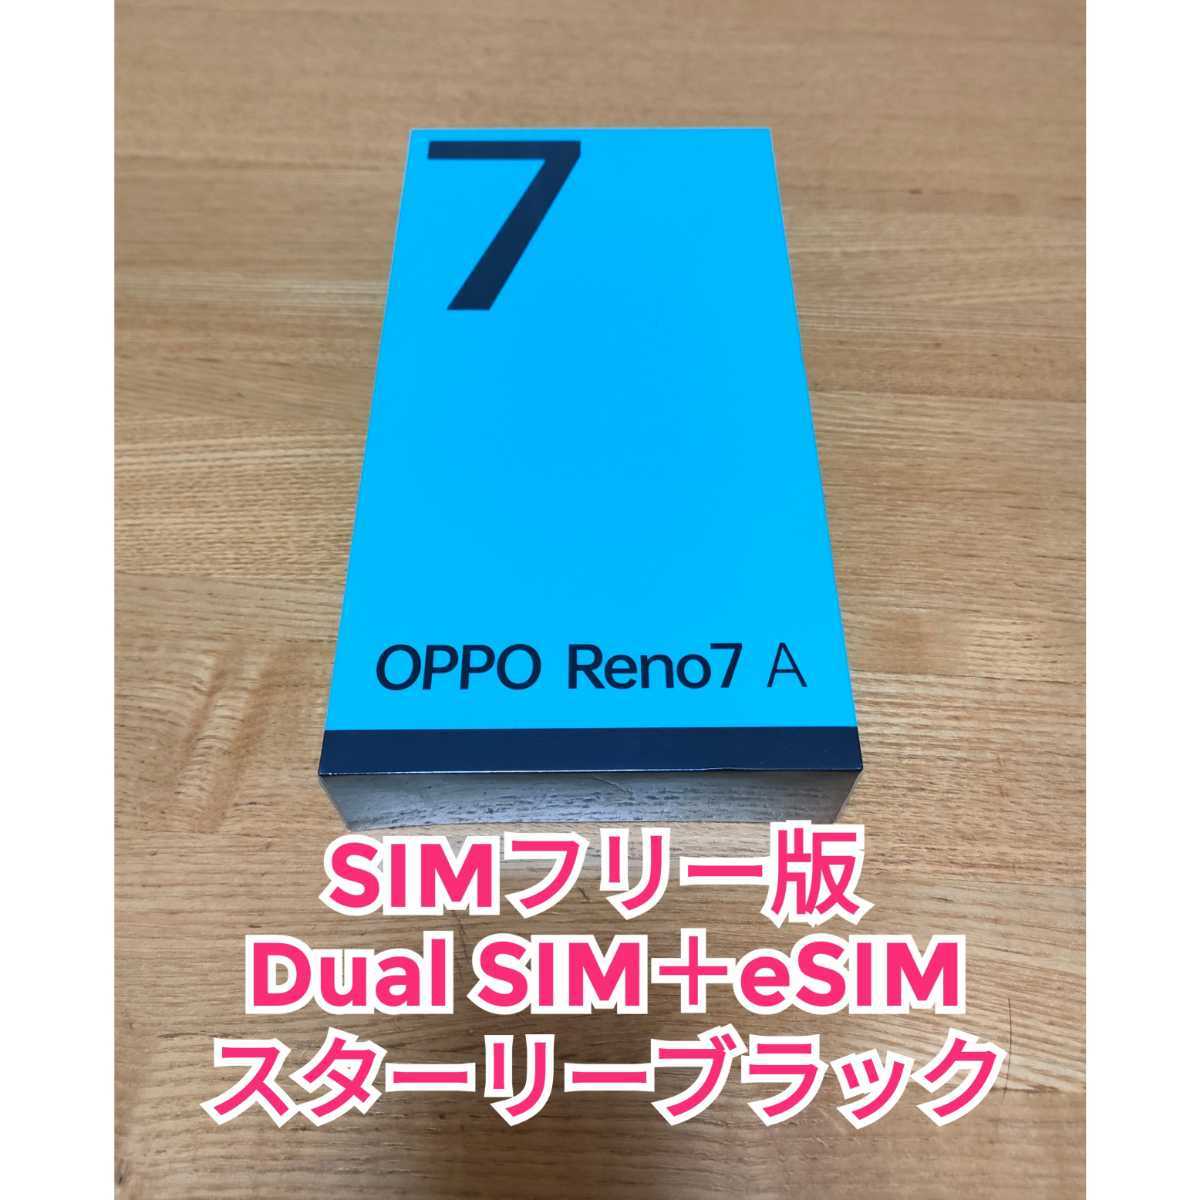 OPPO Reno 7 a SIMフリー版 スターリーブラック 【高品質】 48.0%OFF